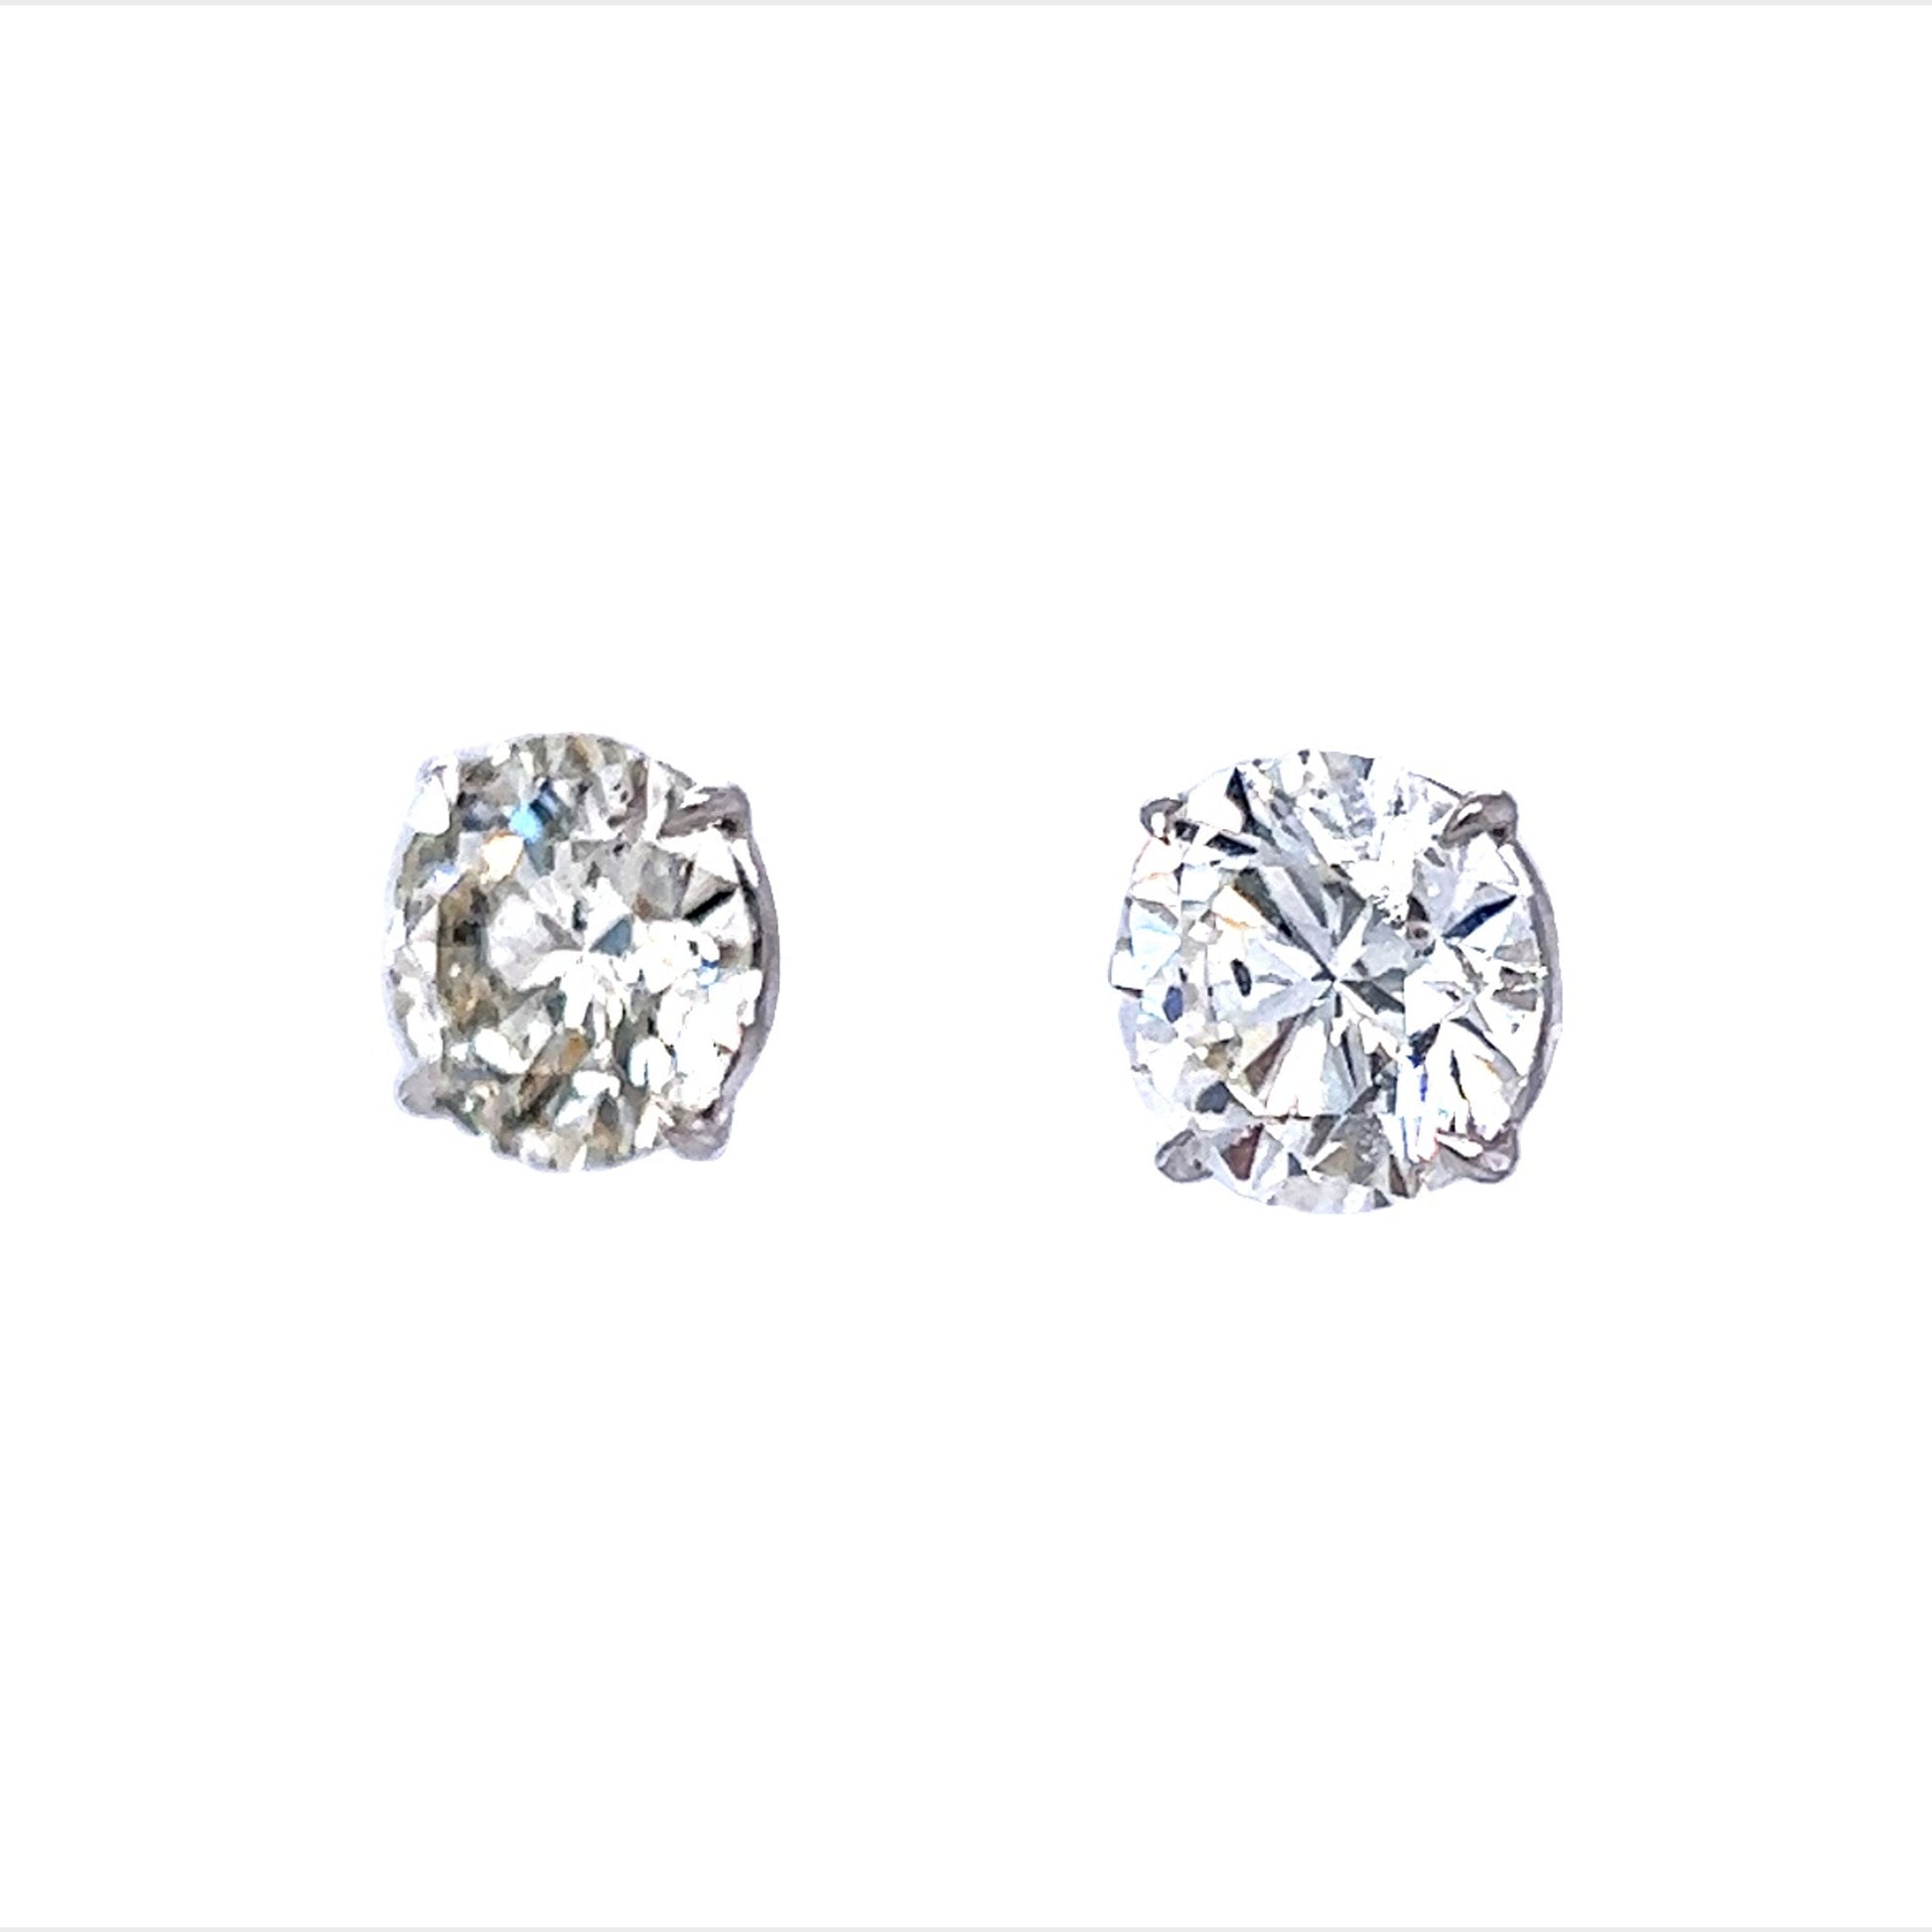 5.17 Round Brilliant Cut Diamond Earring Studs in 18k White Gold